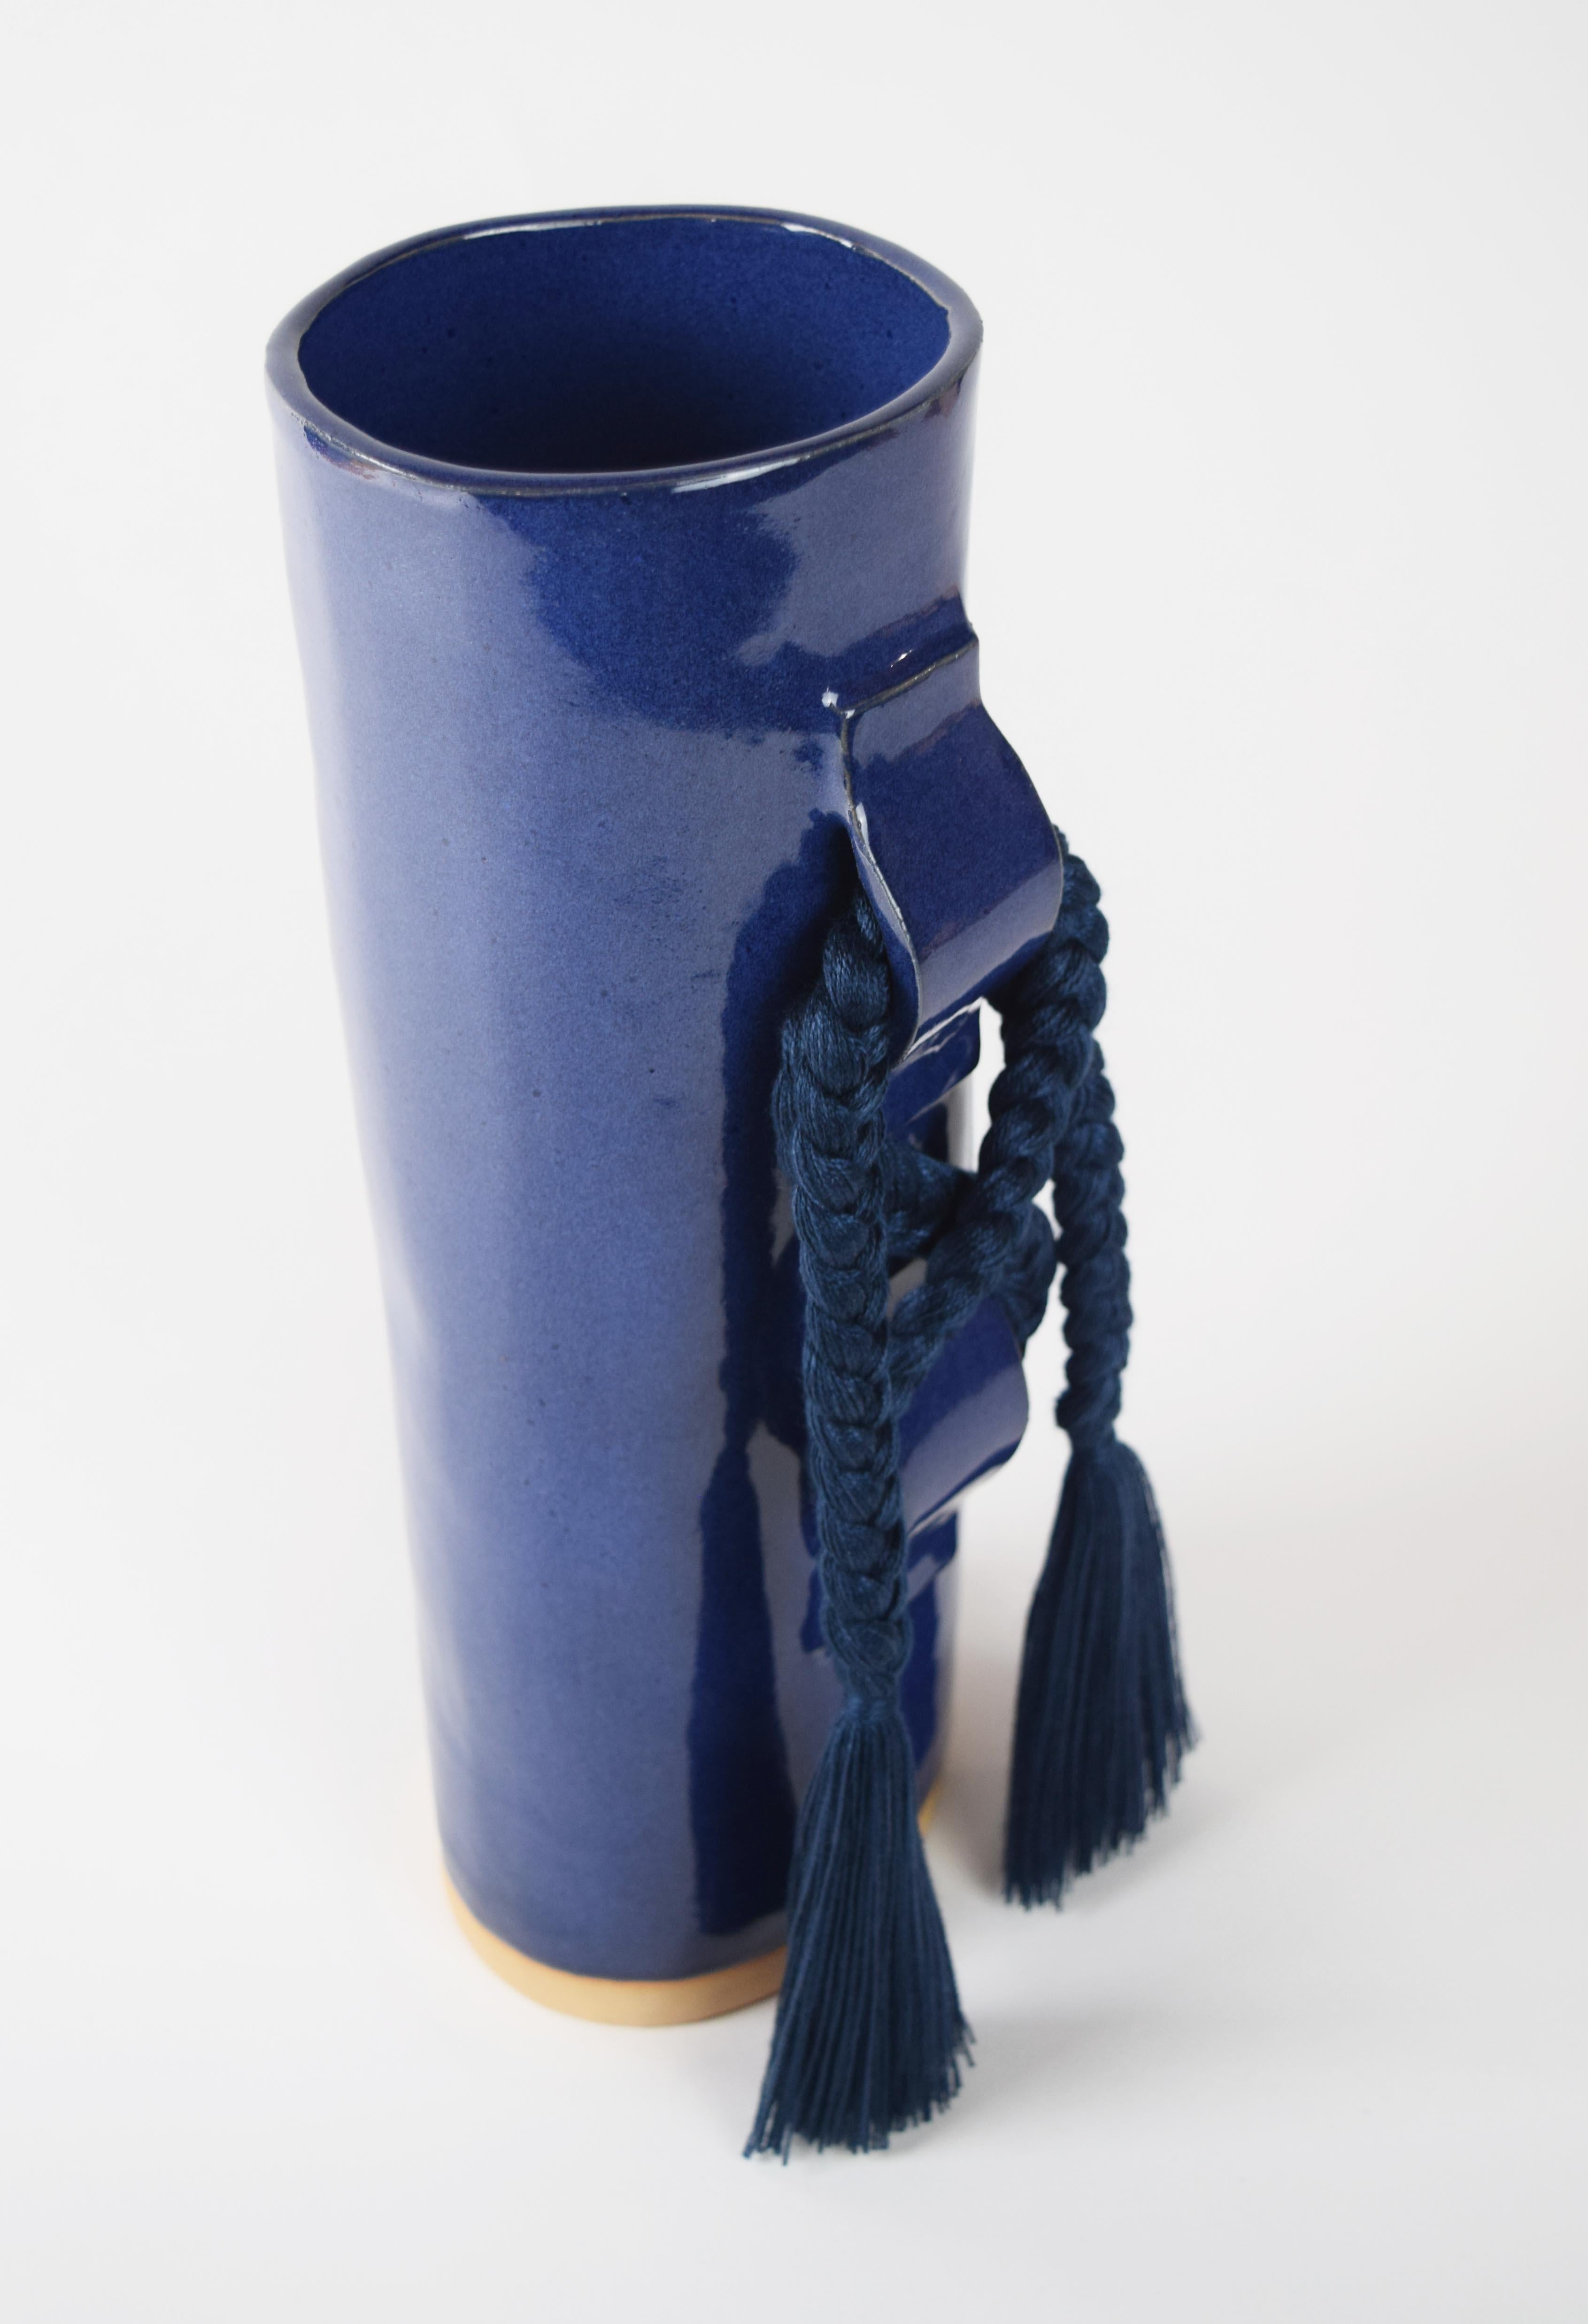 Organic Modern Handmade Ceramic Vase #696 in Deep Blue with Navy Tencel Braid and Fringe For Sale